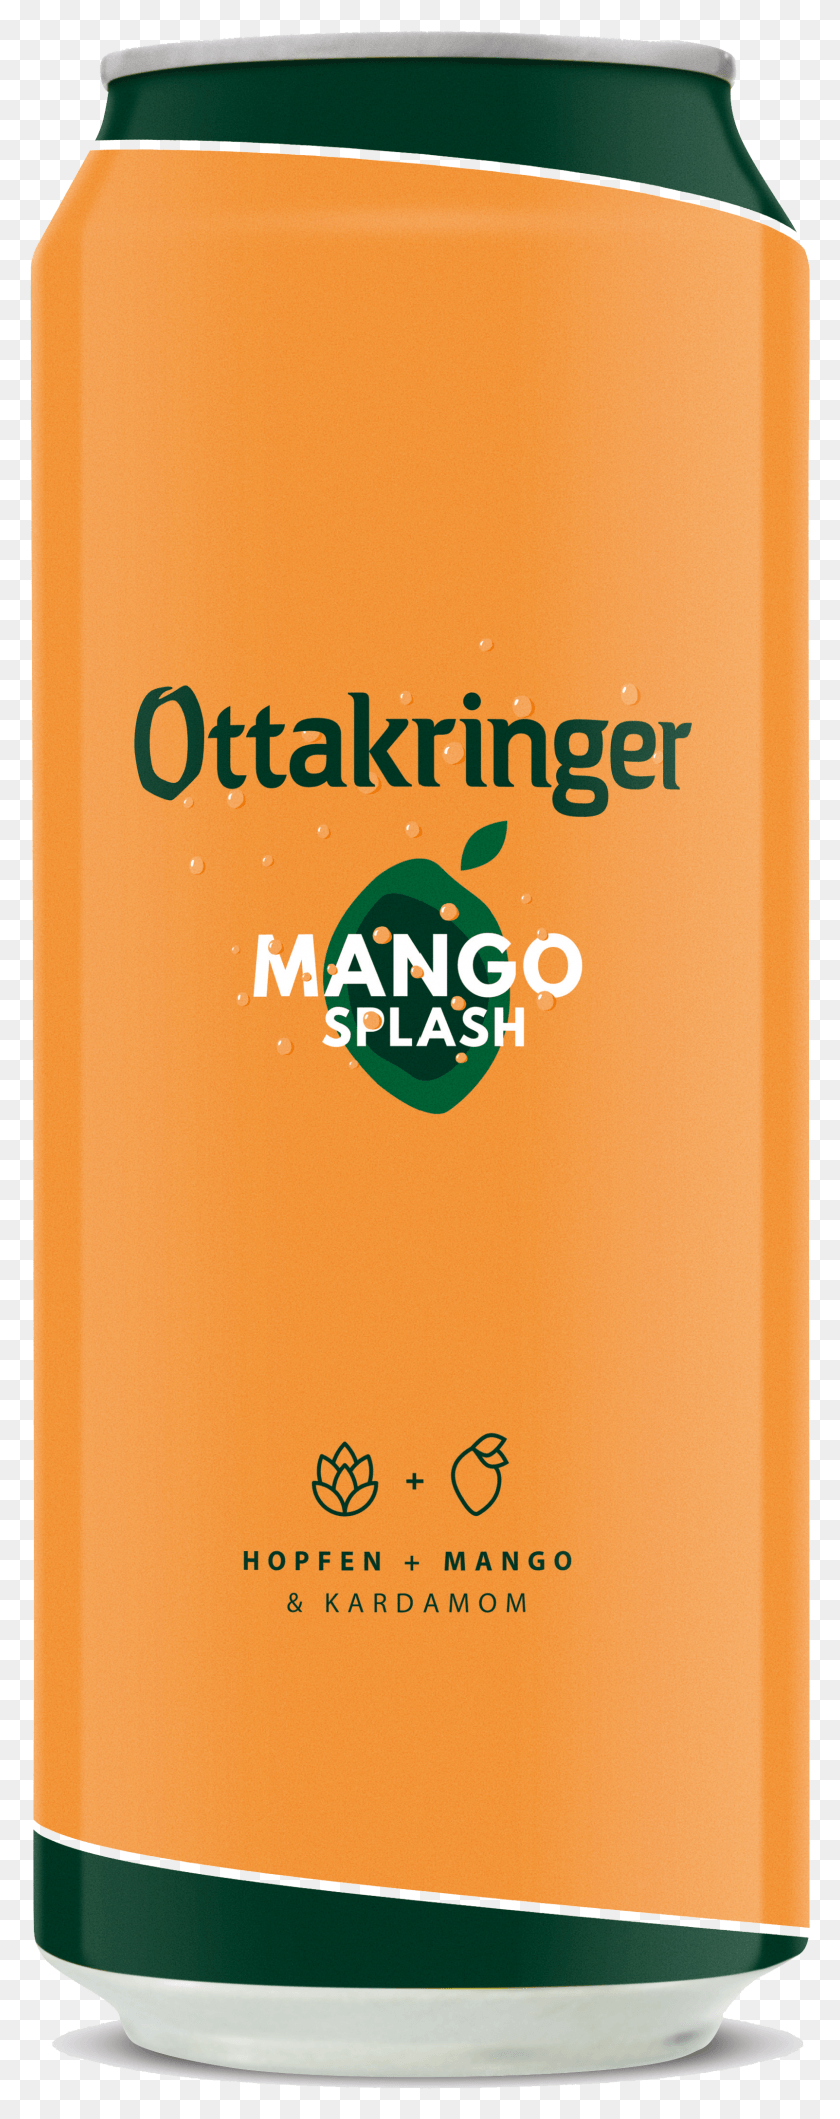 1603x4233 Descargar Png / Mango Splash Dose 05L Cmyk Brauerei Ottakringer Hd Png